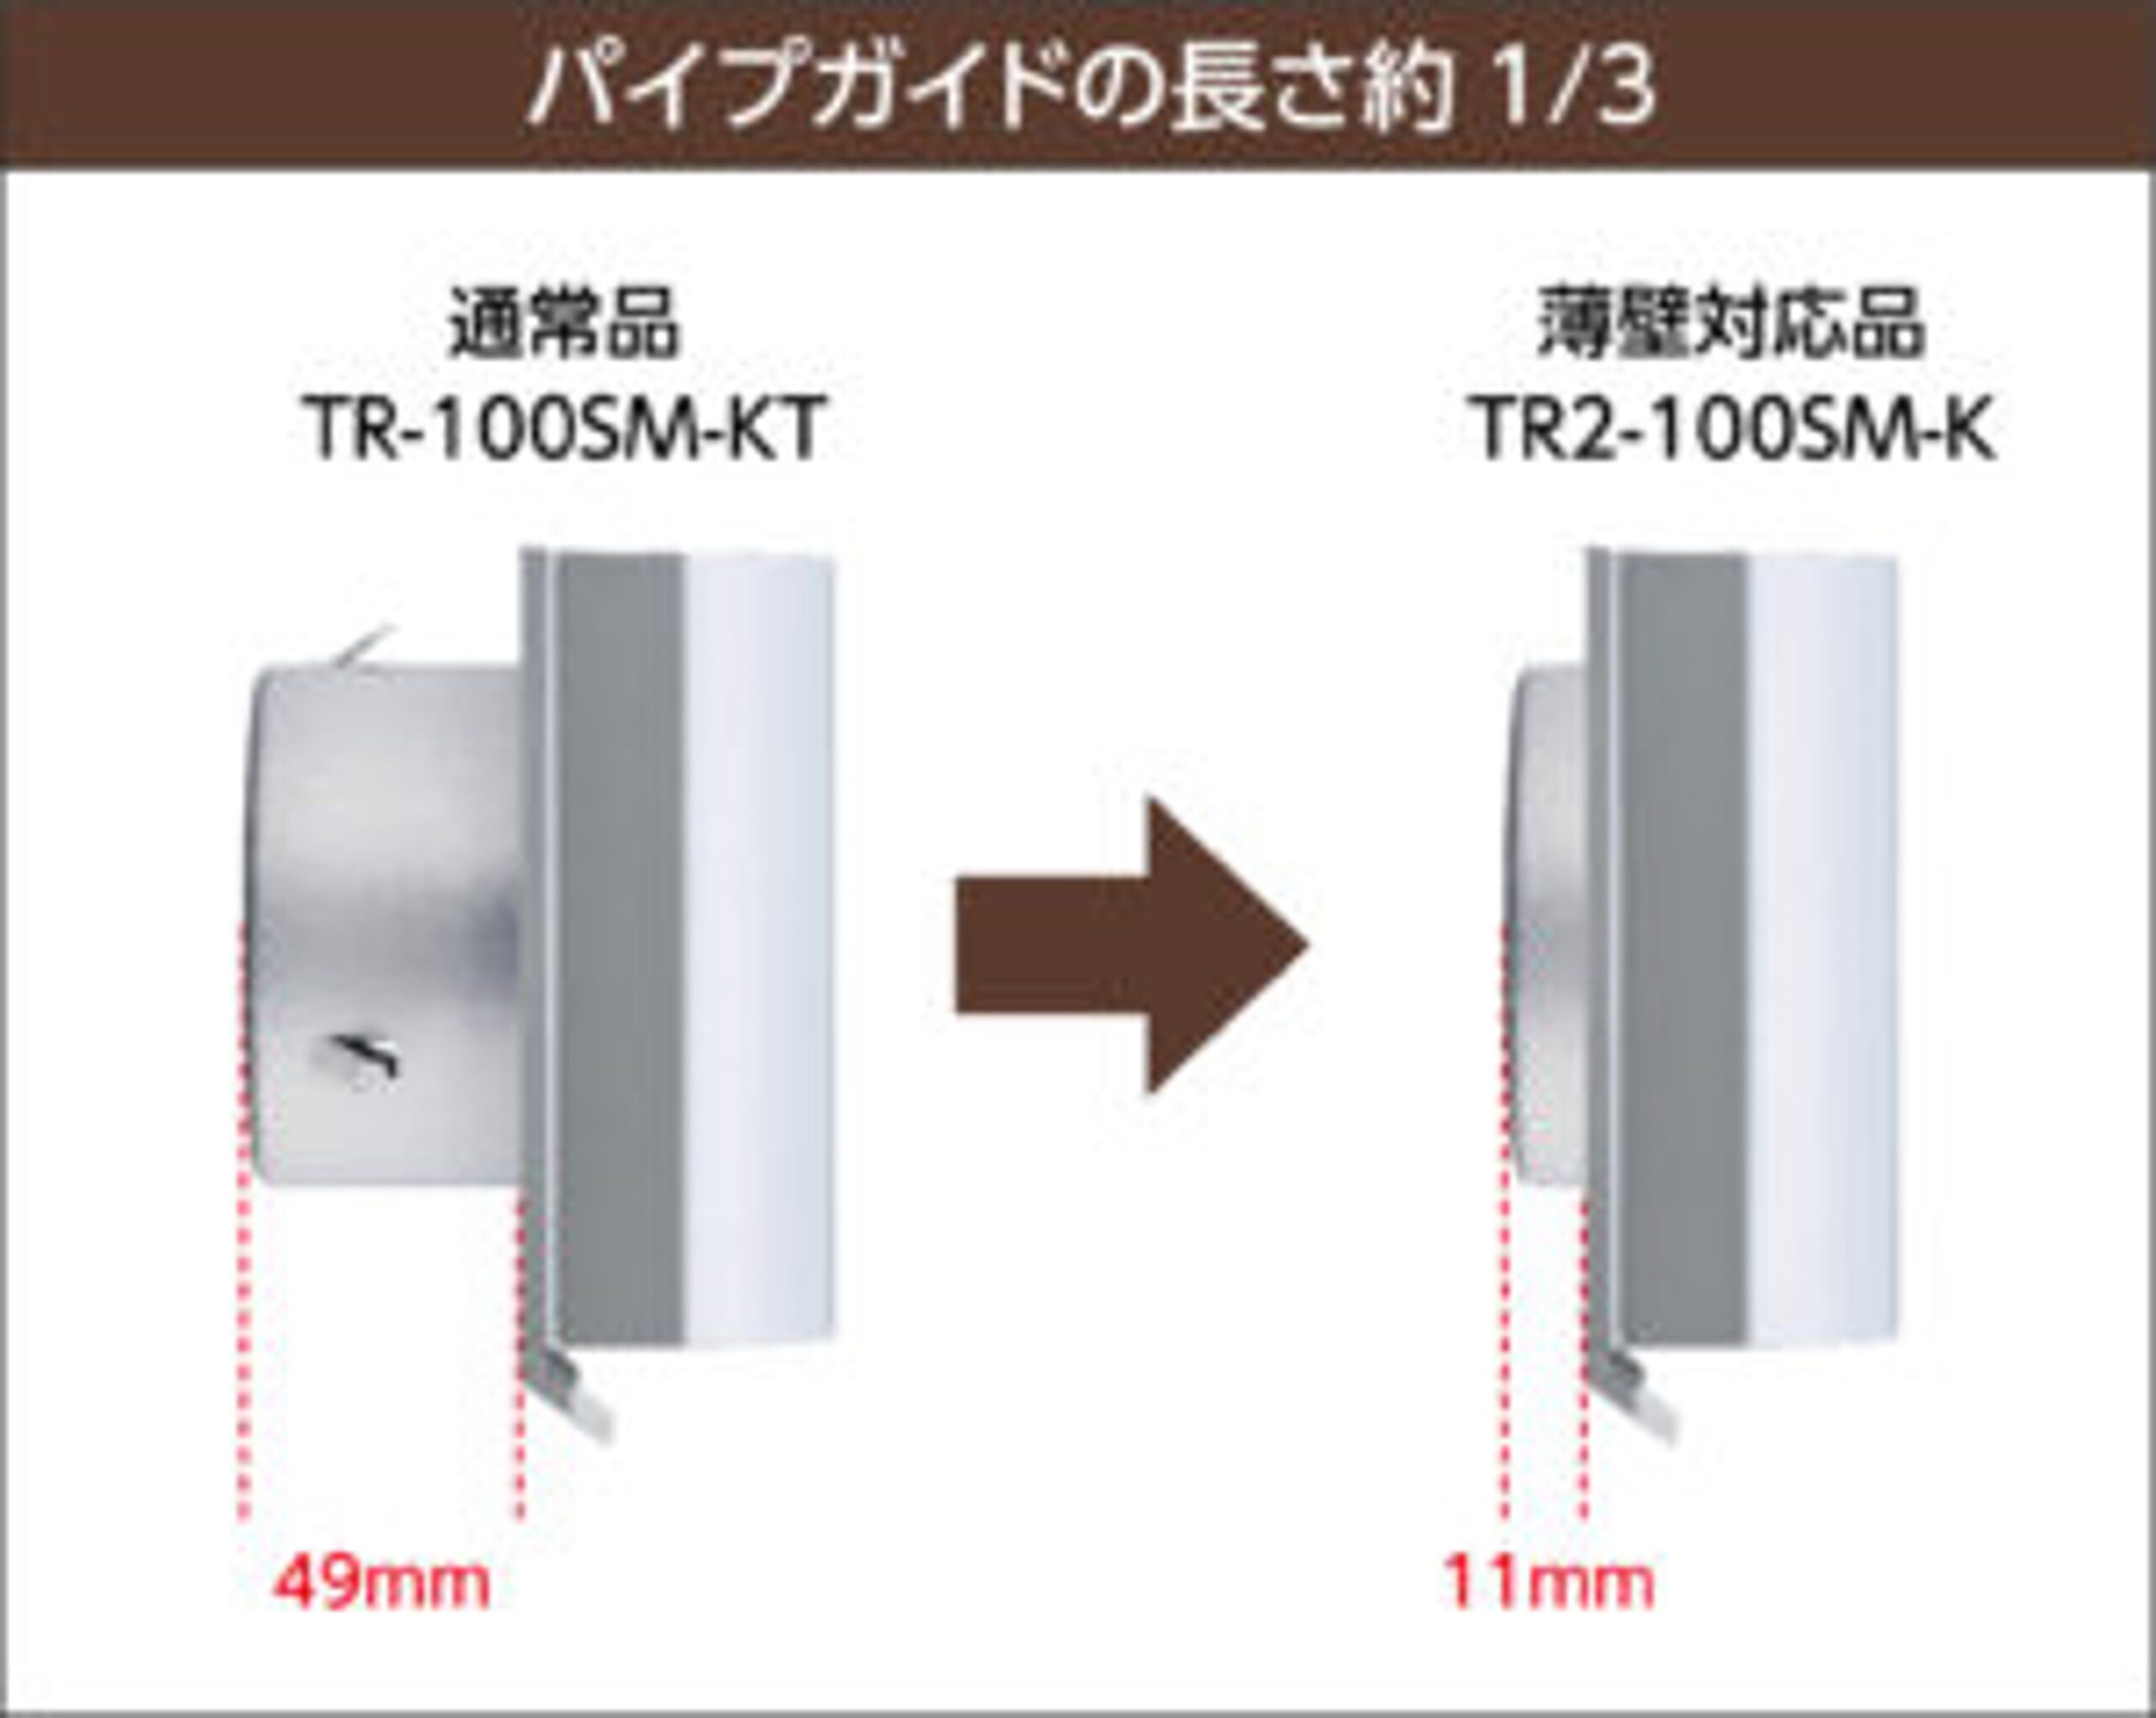 TR2シリーズ パイプガイドの長さ約1/3 パイプガイドの薄さ11mm